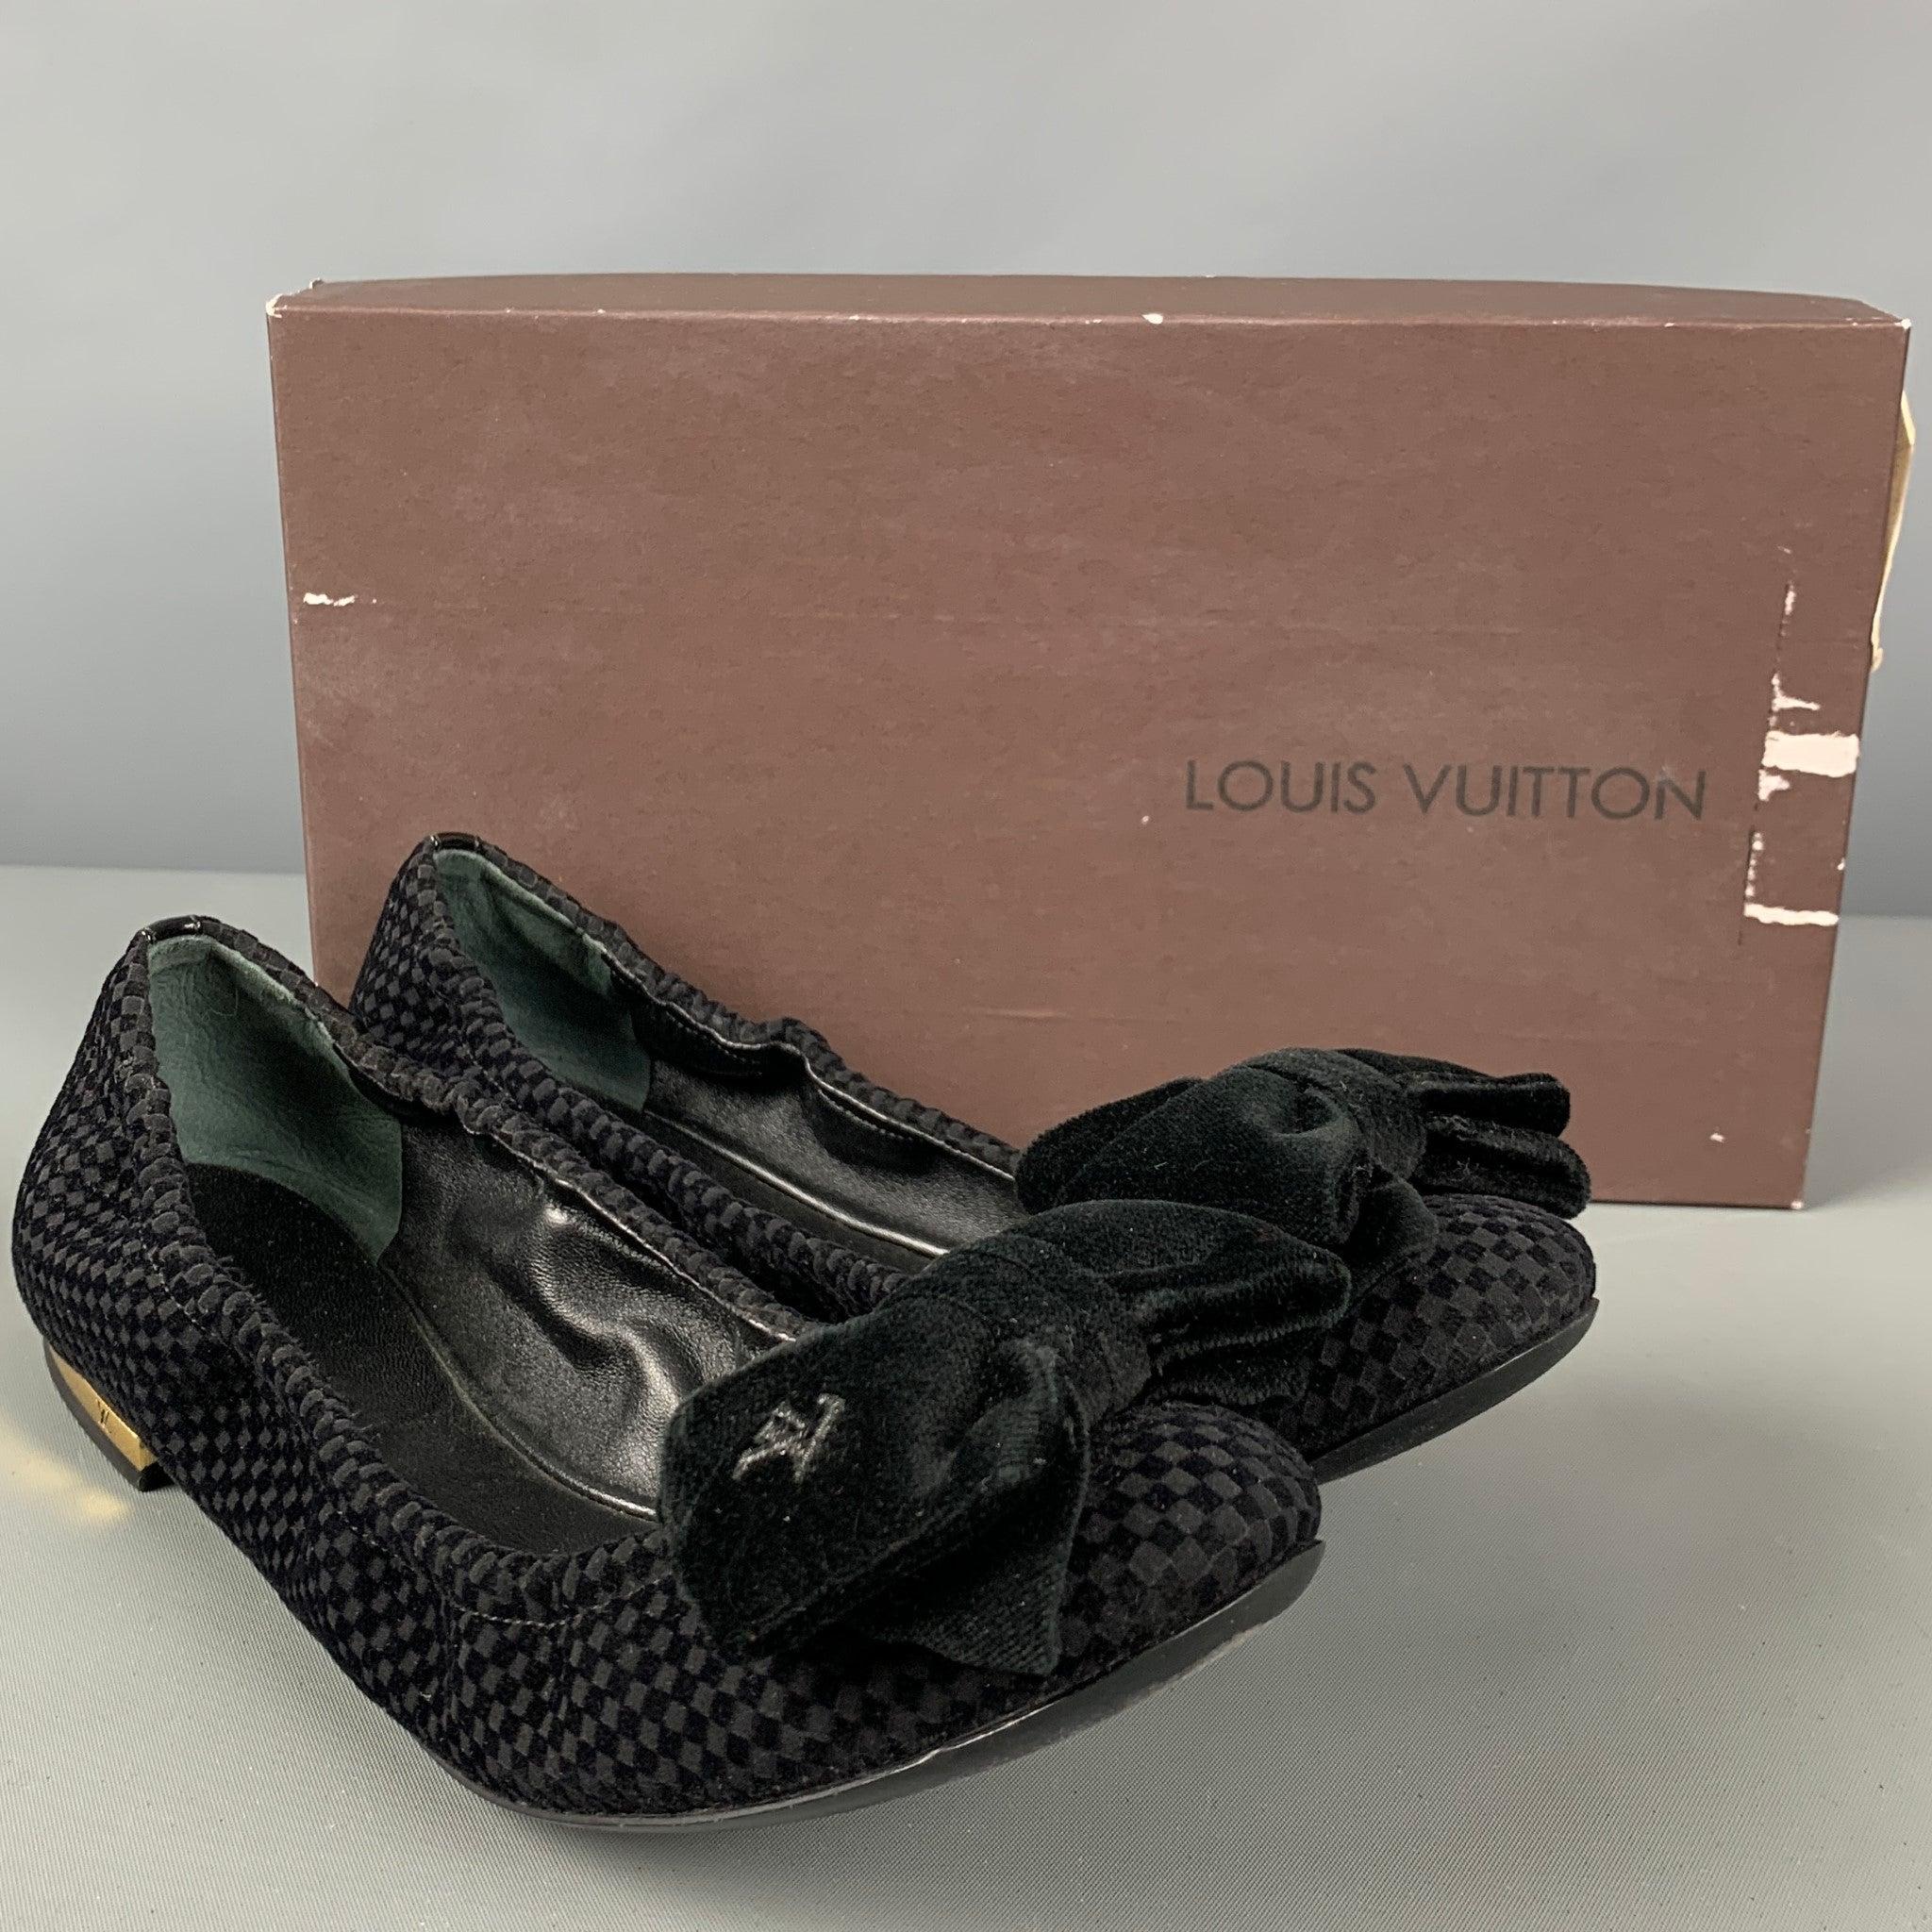 LOUIS VUITTON Size 7 Black Velvet Checkered Ballet Flats For Sale 5